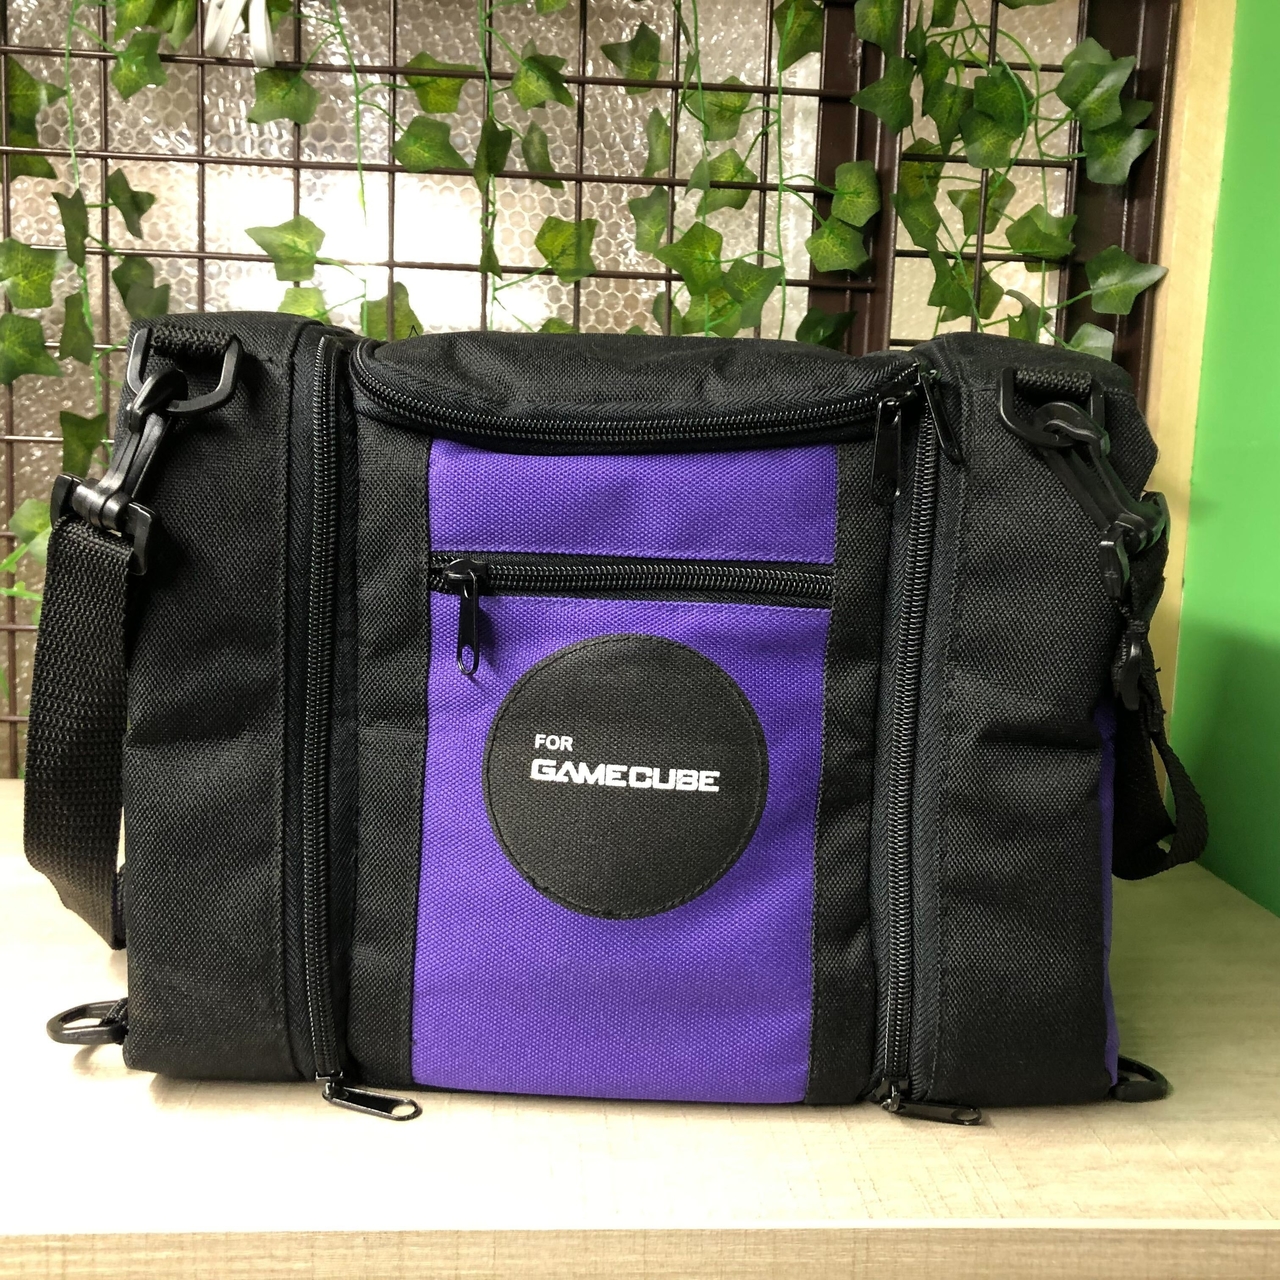 Gamecube Travel Bag - Gamecube Hardware